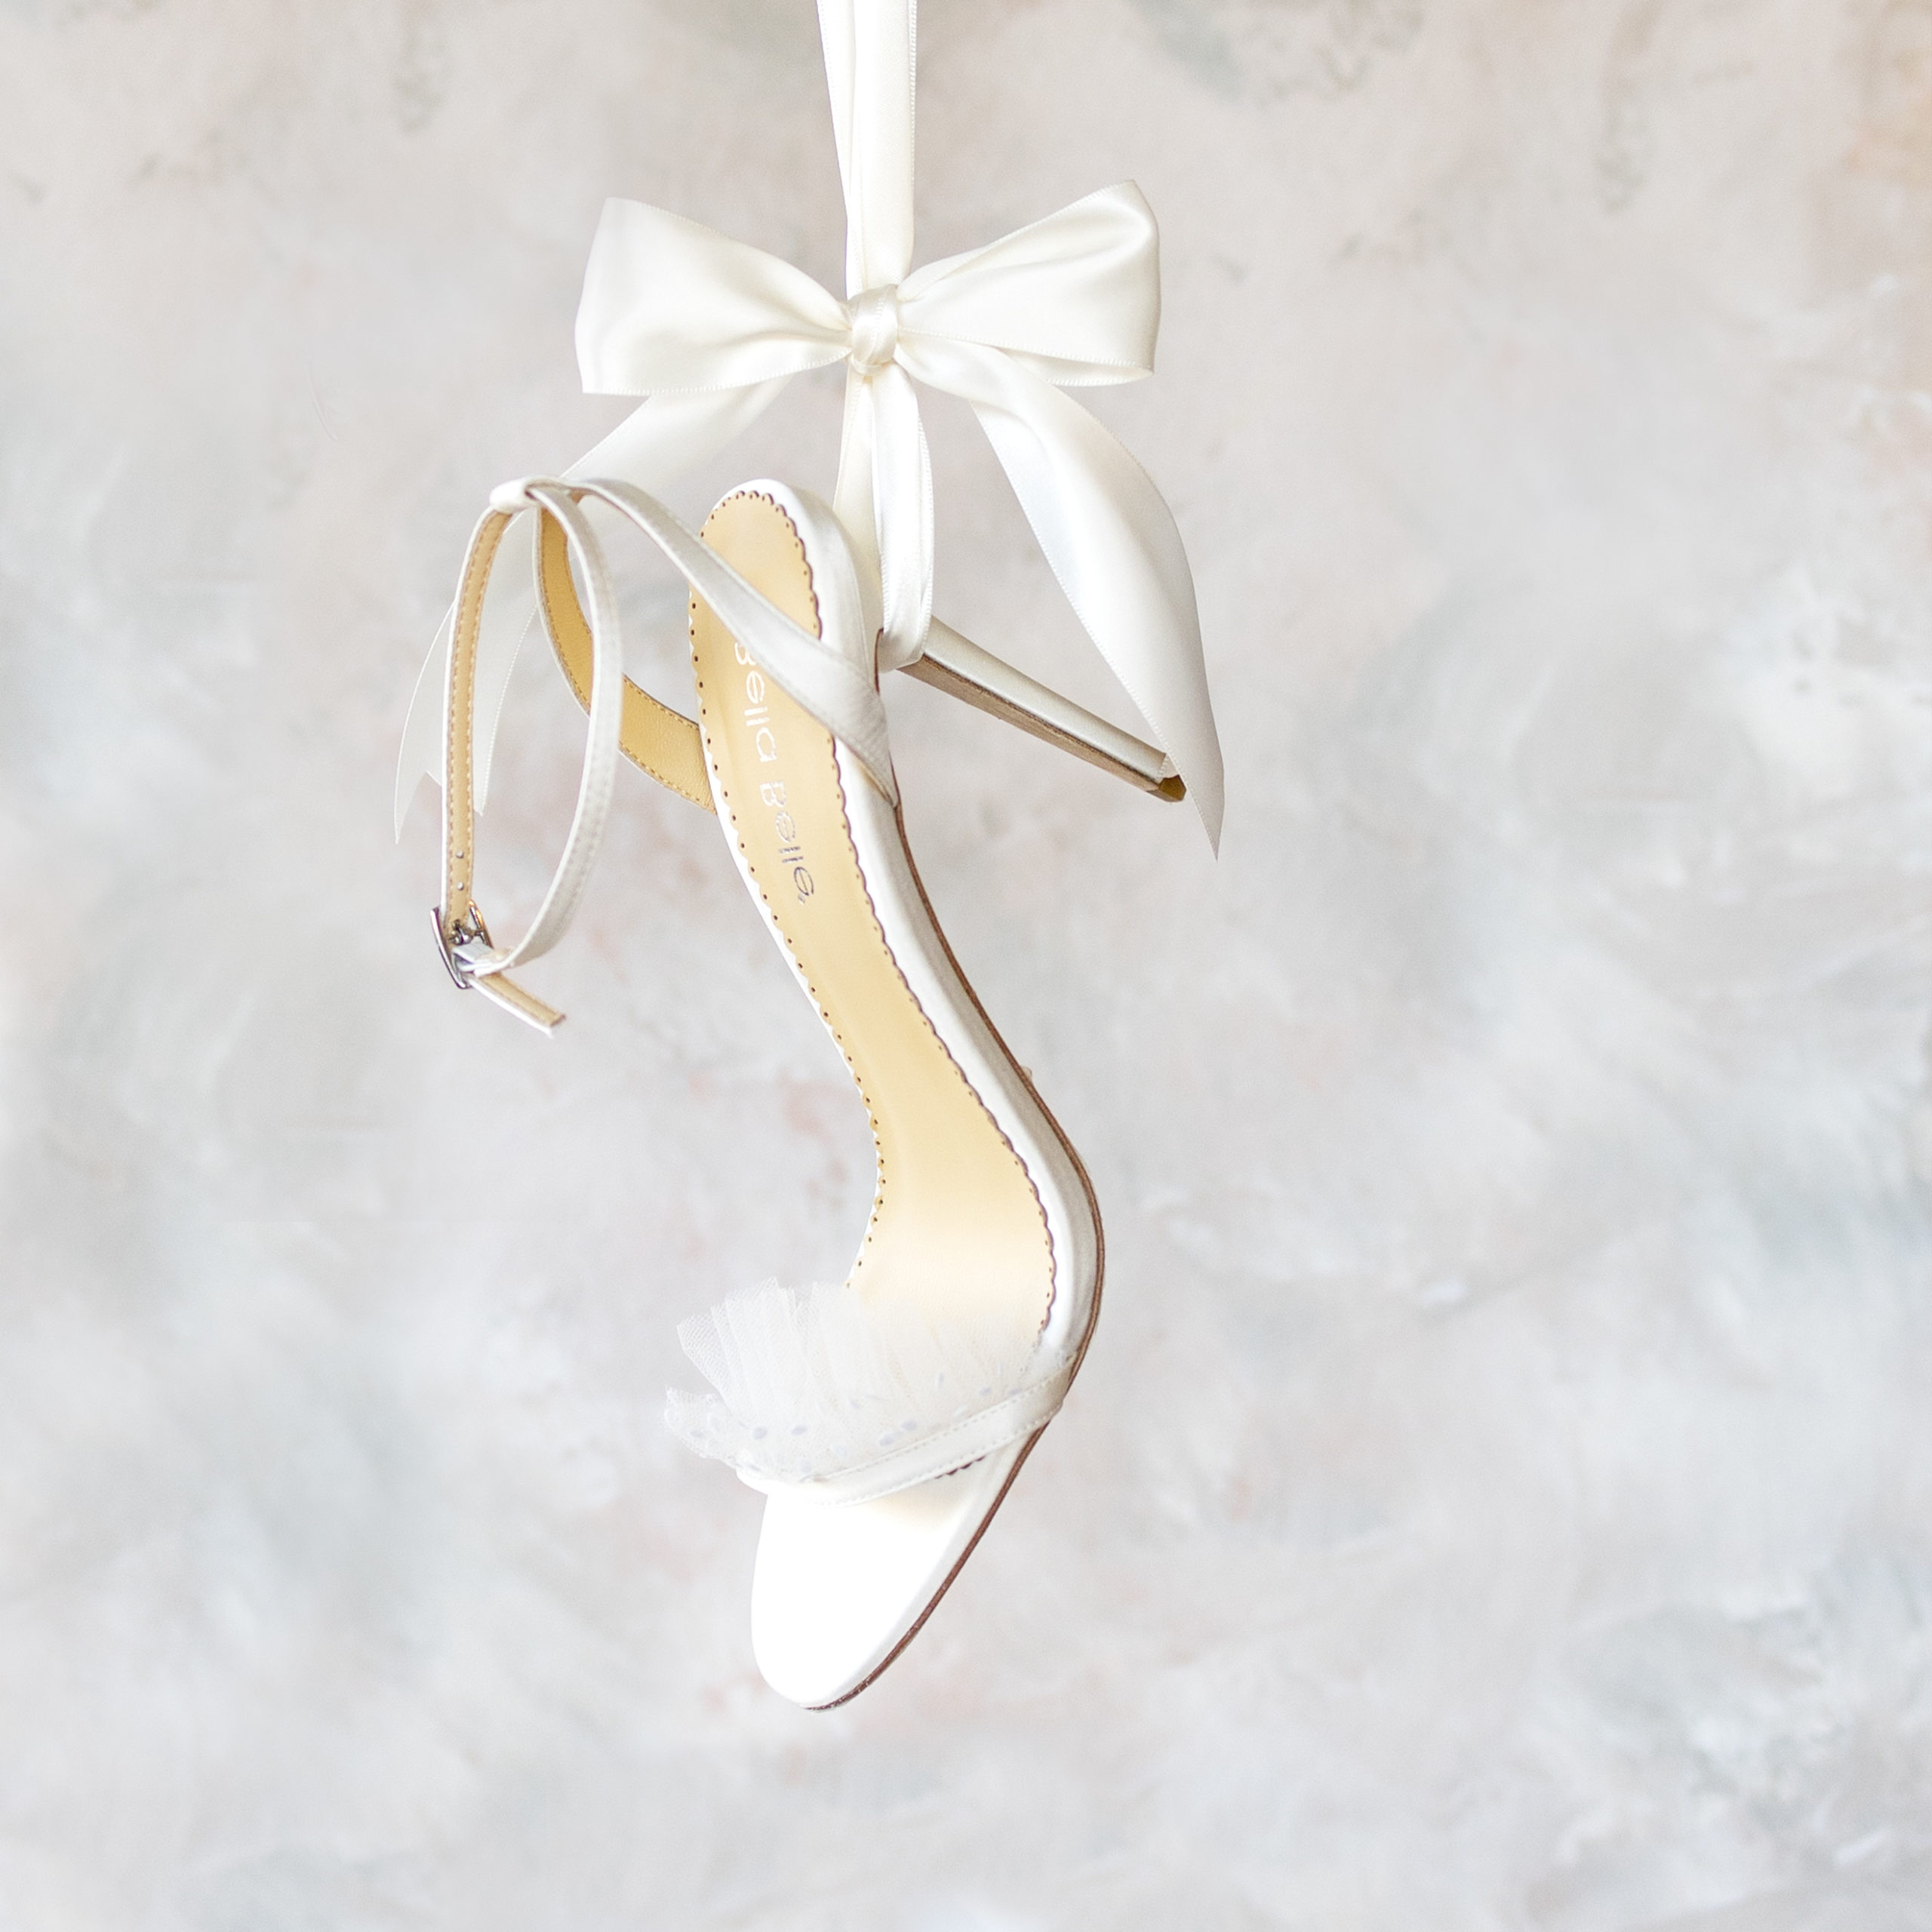 Wedding shoes - bella belle shoes - Sioux Falls, South Dakota